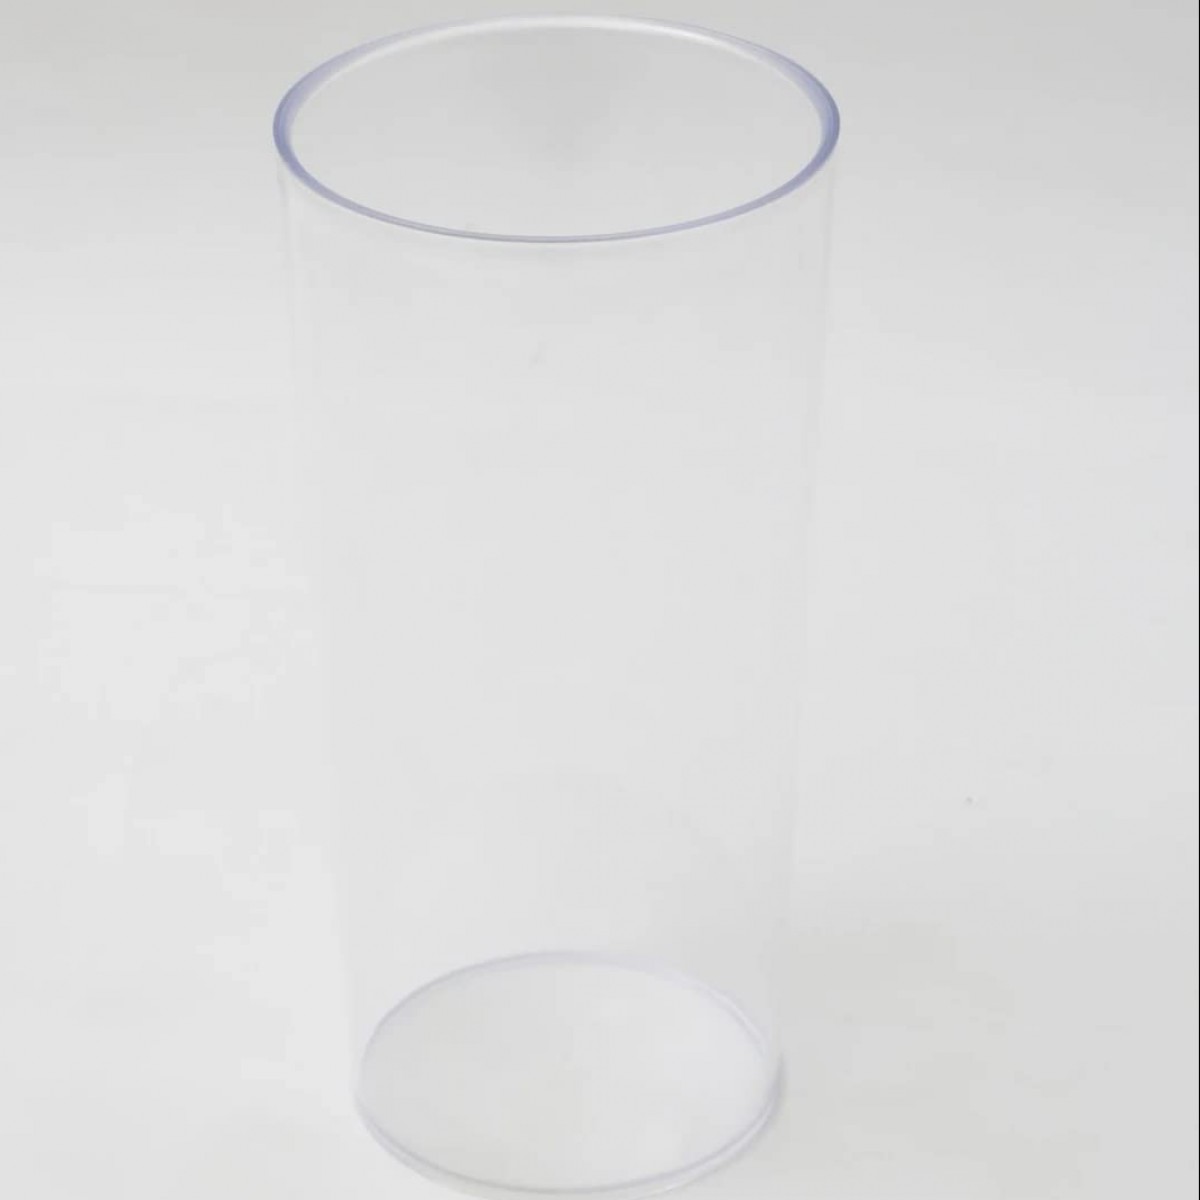 5116 Cylinder Clear 12x25cm Acrylic Vase - 1 No